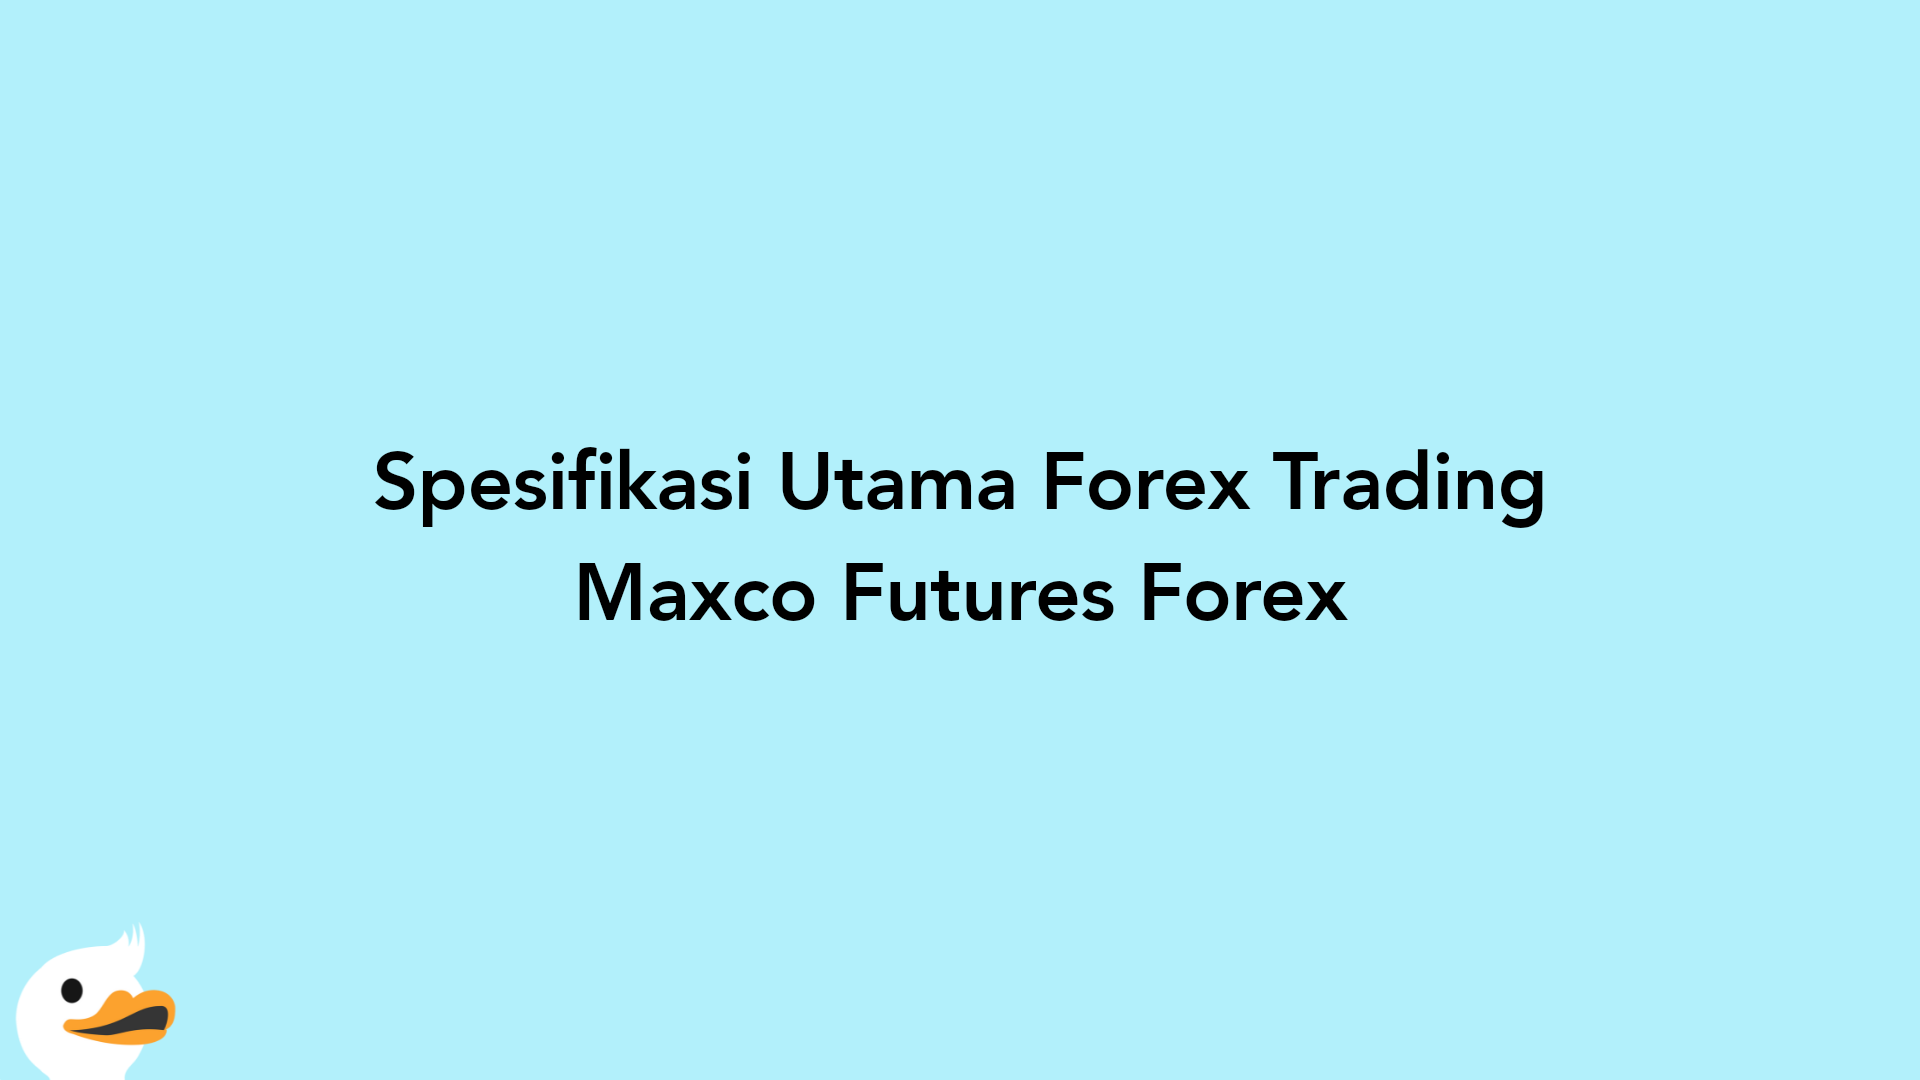 Spesifikasi Utama Forex Trading Maxco Futures Forex